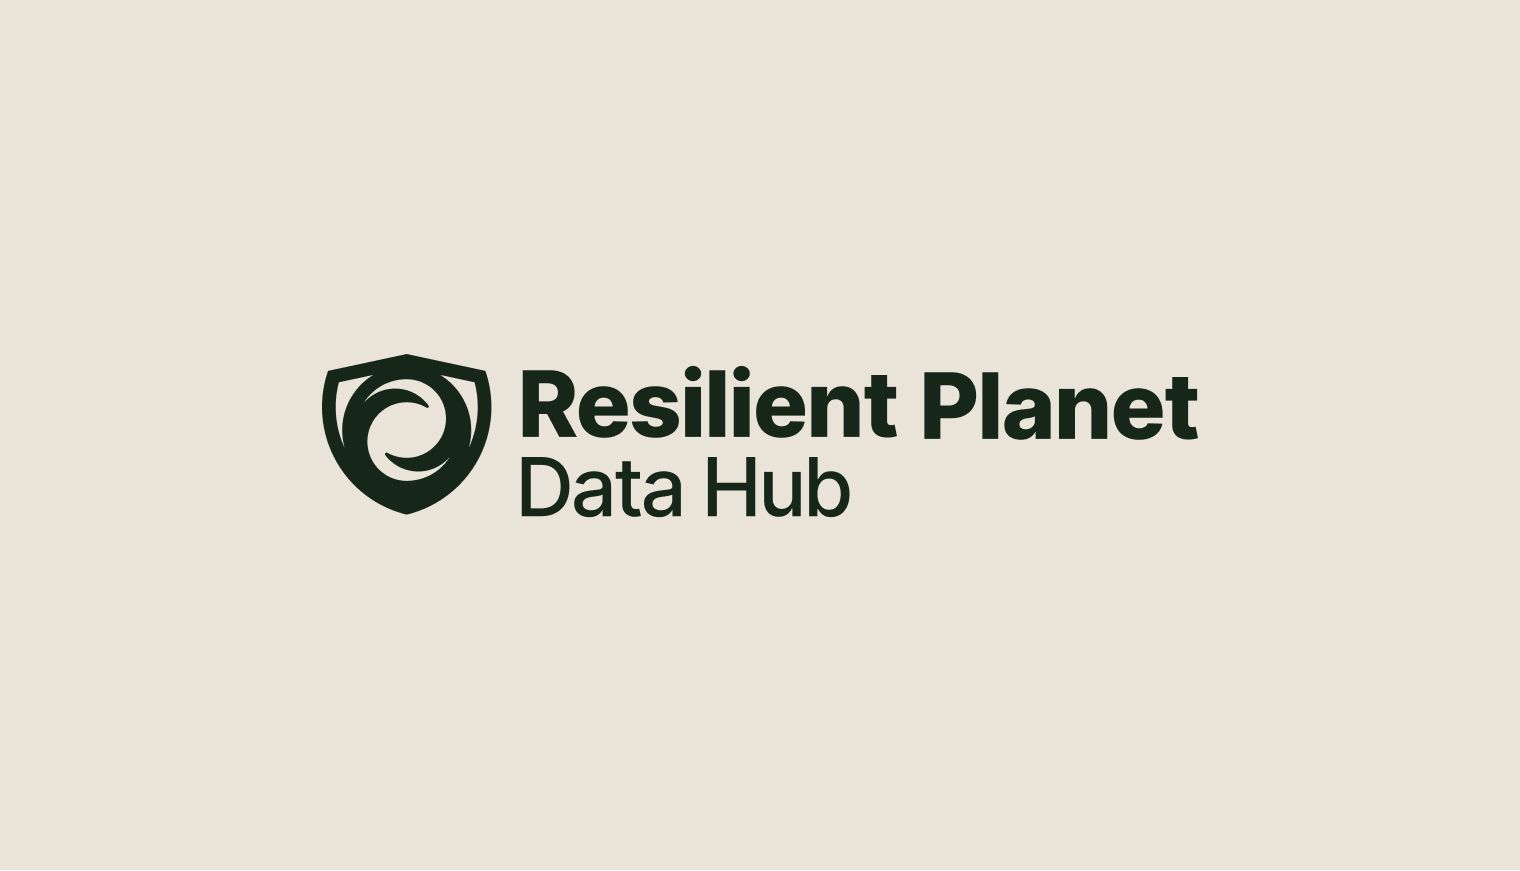 Resilient Planet Data Hub